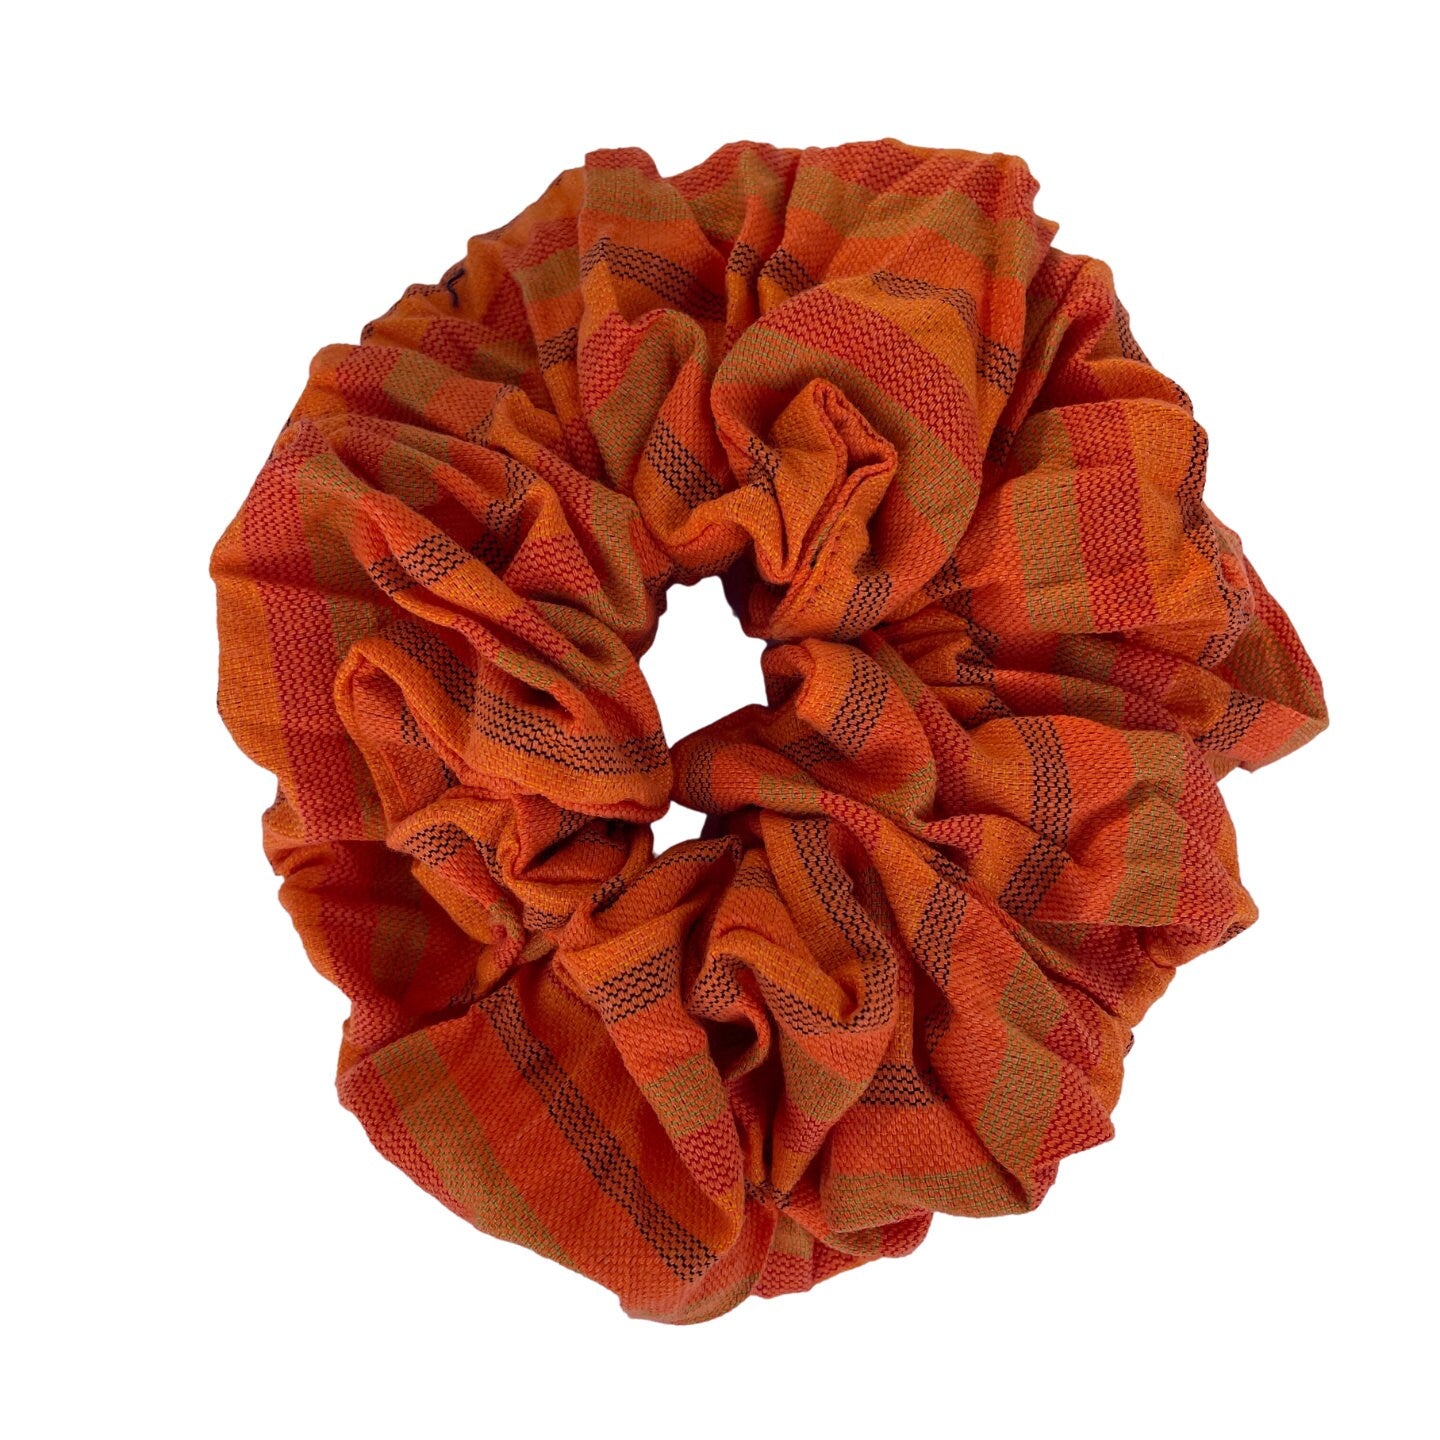 XXL Scrunchie Hair Tie, Oversized Aesthetic Hair Accessory, Stocking Bohemian Gift, Orange